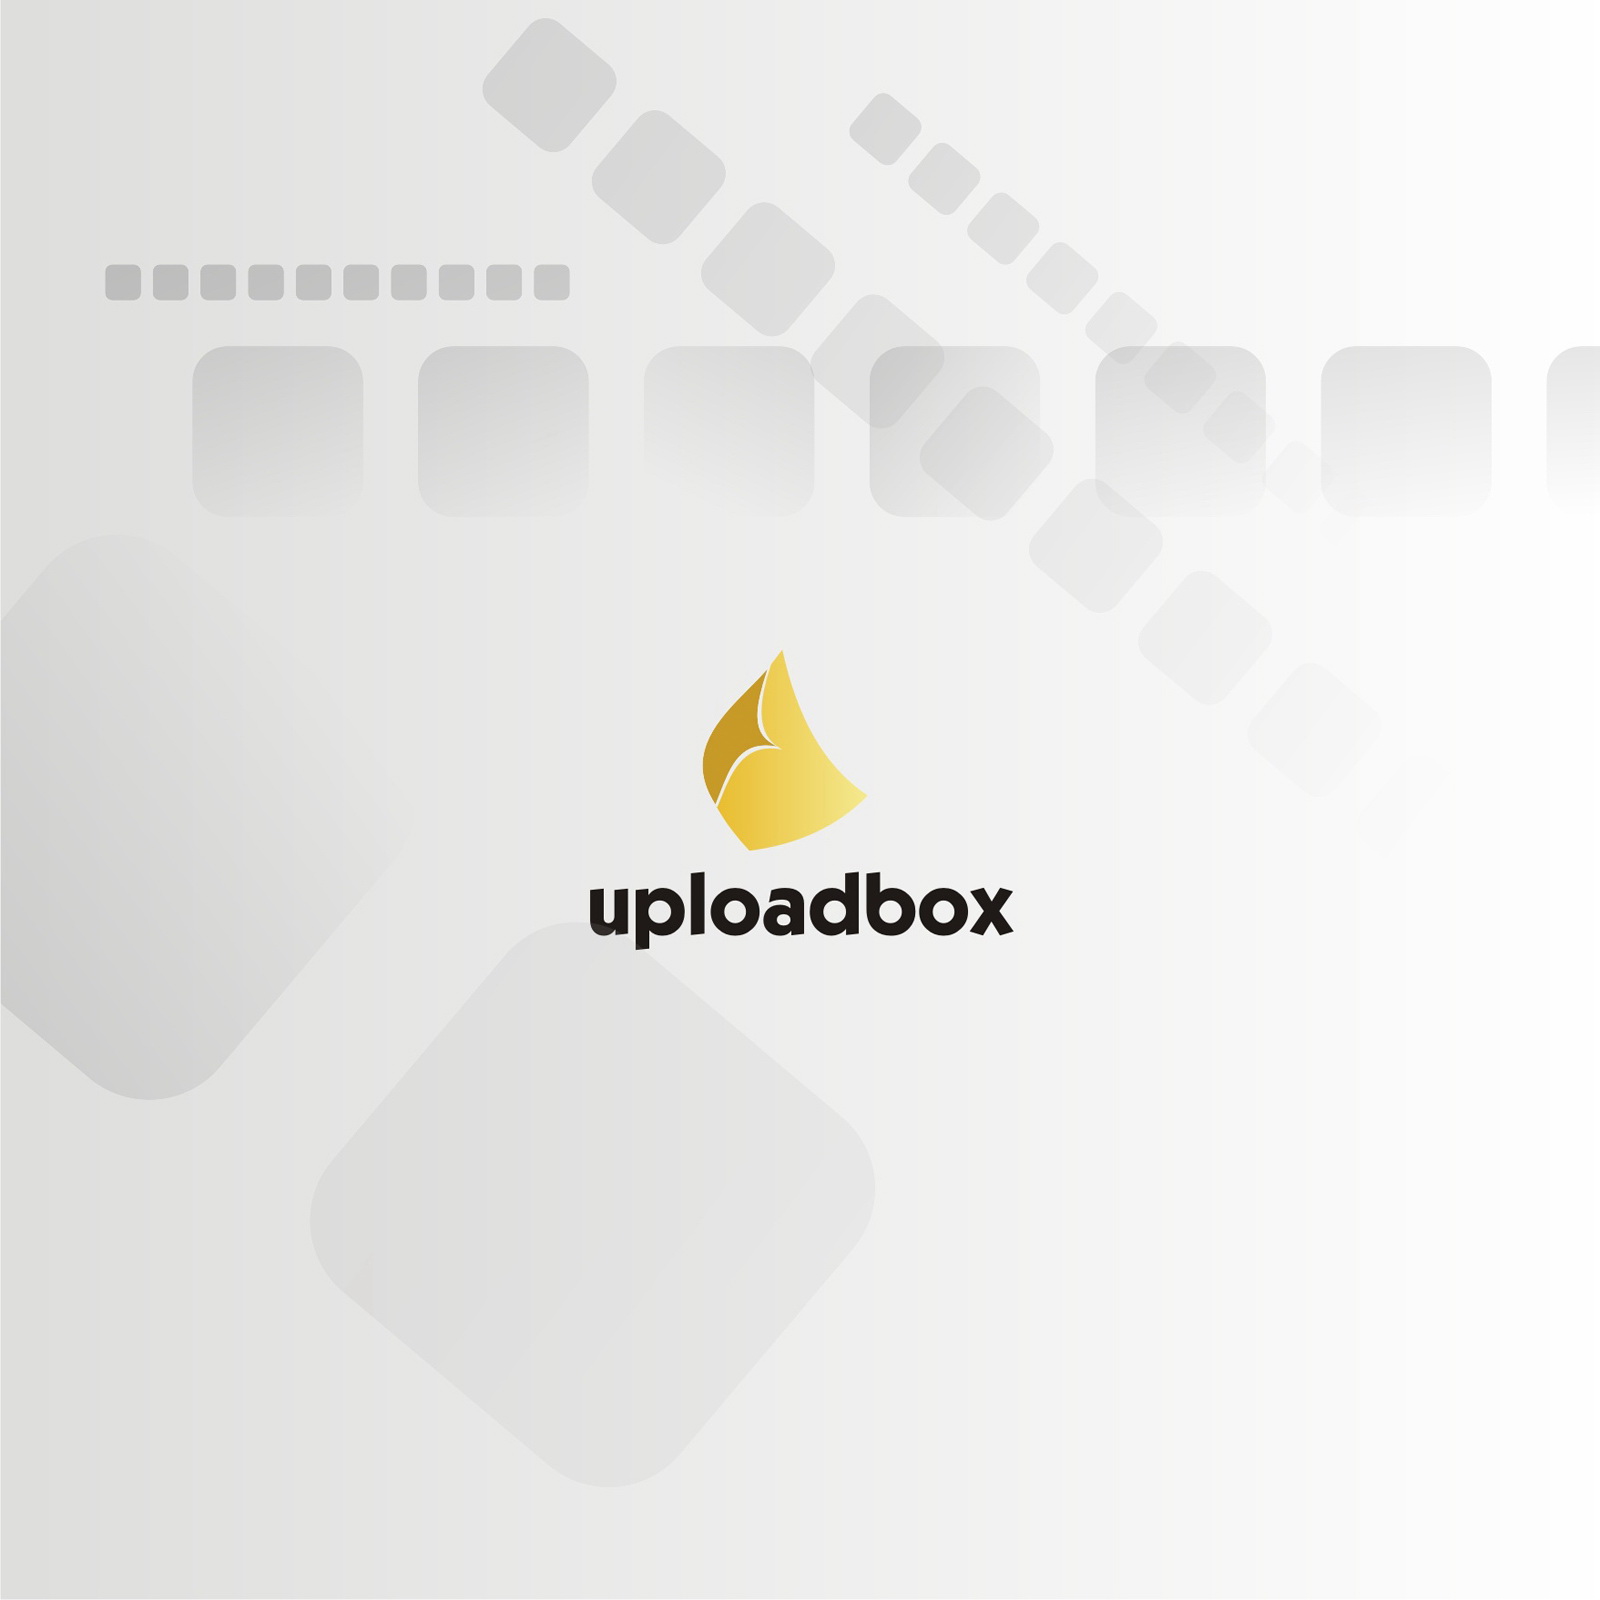 uploadbox